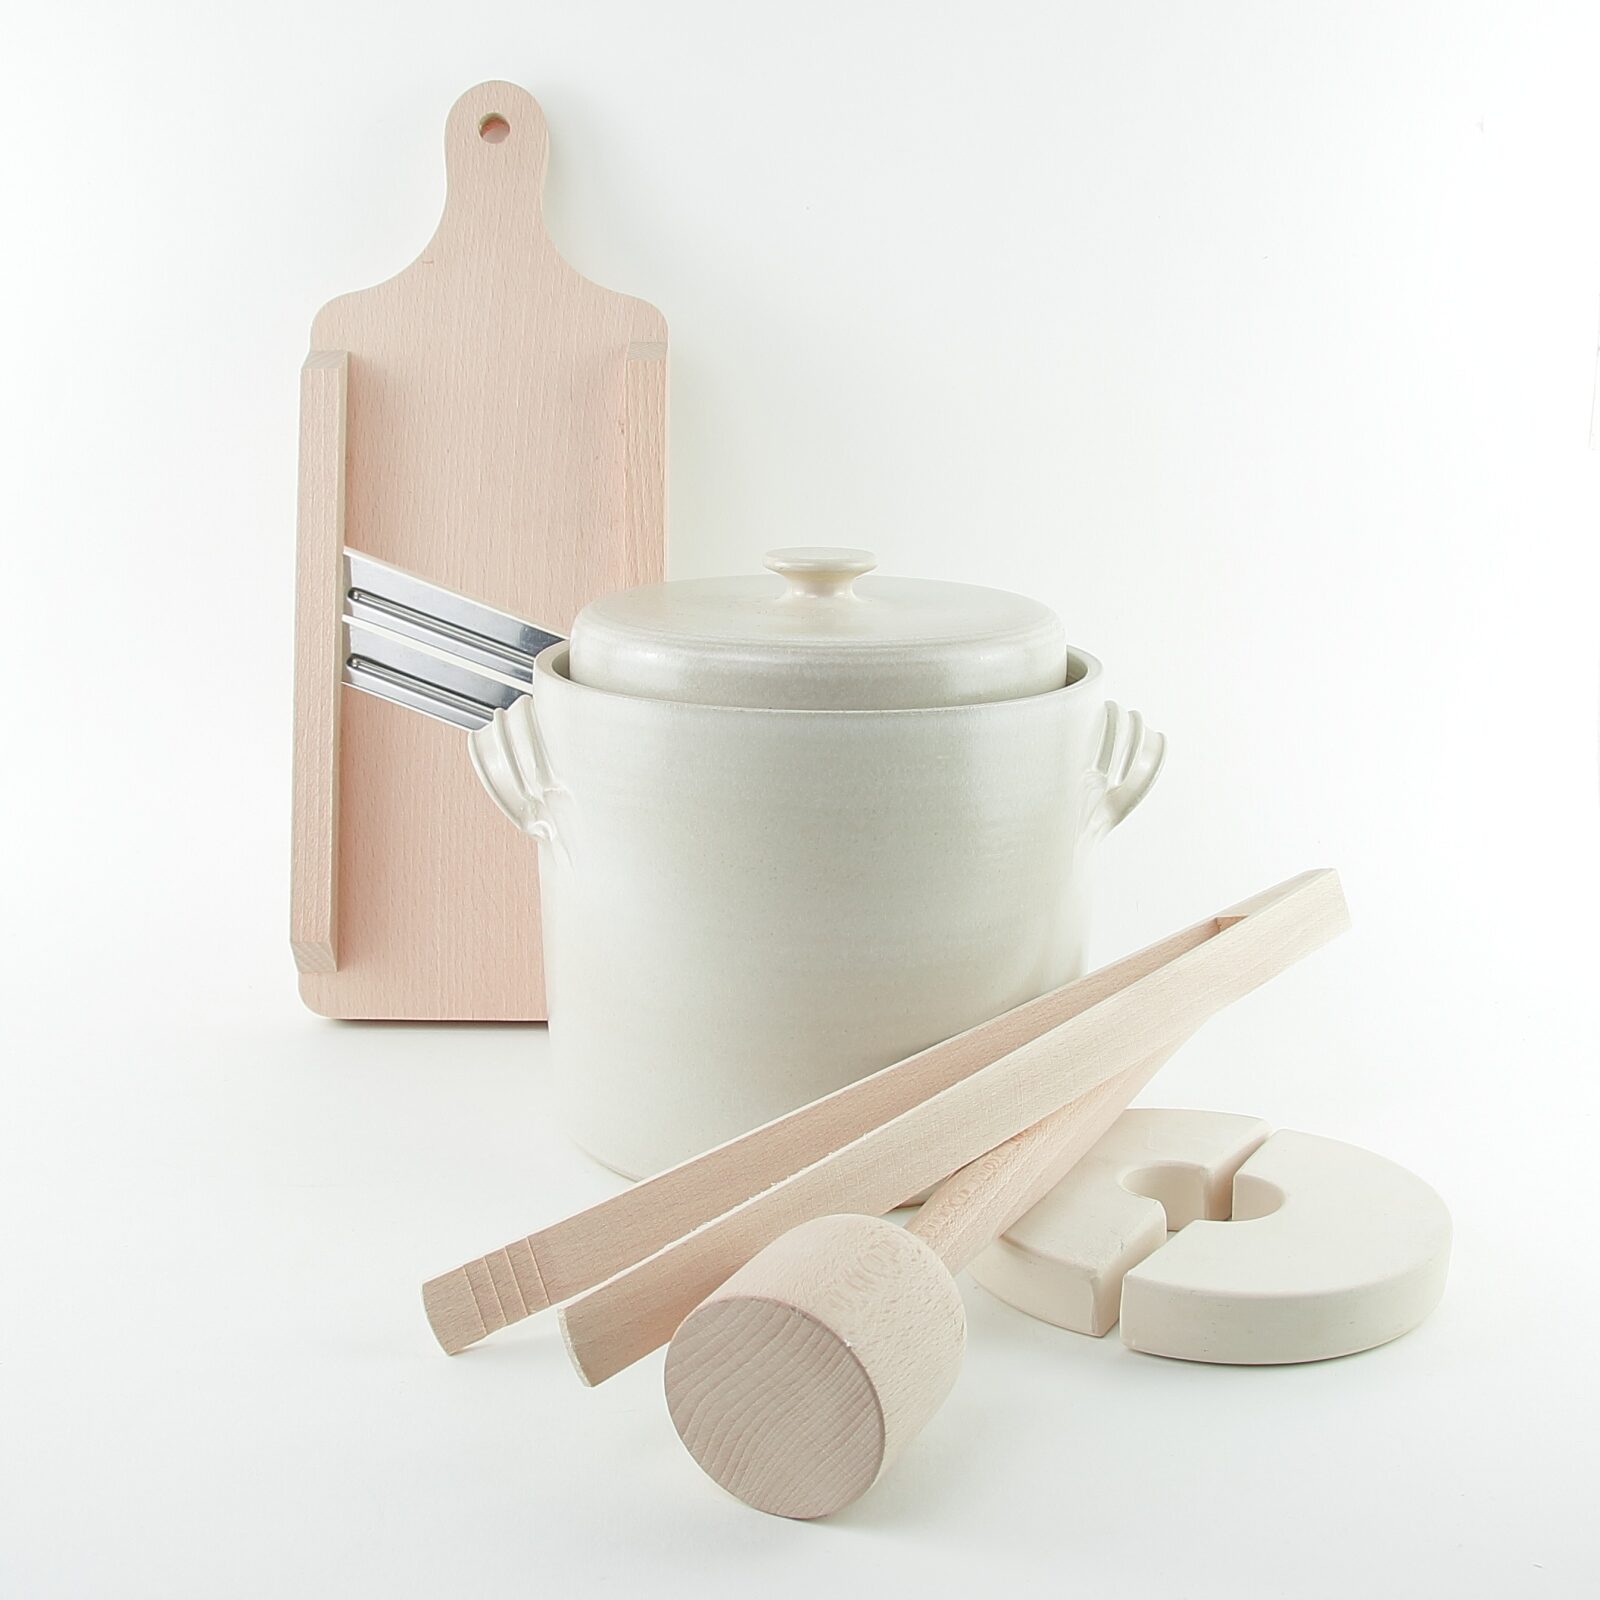 2 litre handmade ceramic sauerkraut crocks with wooden tools